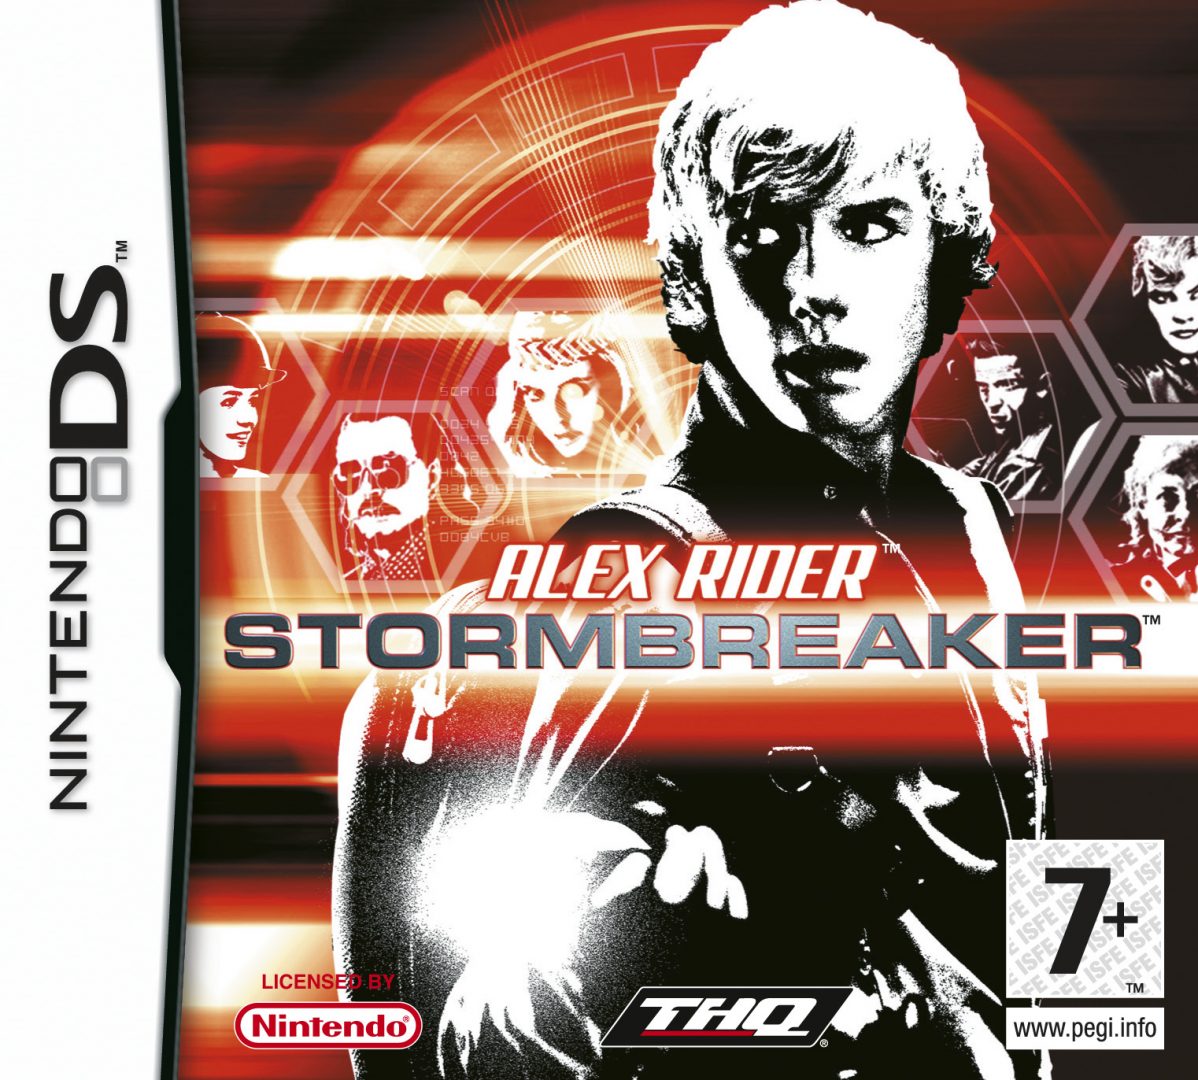 The coverart image of Alex Rider: Stormbreaker